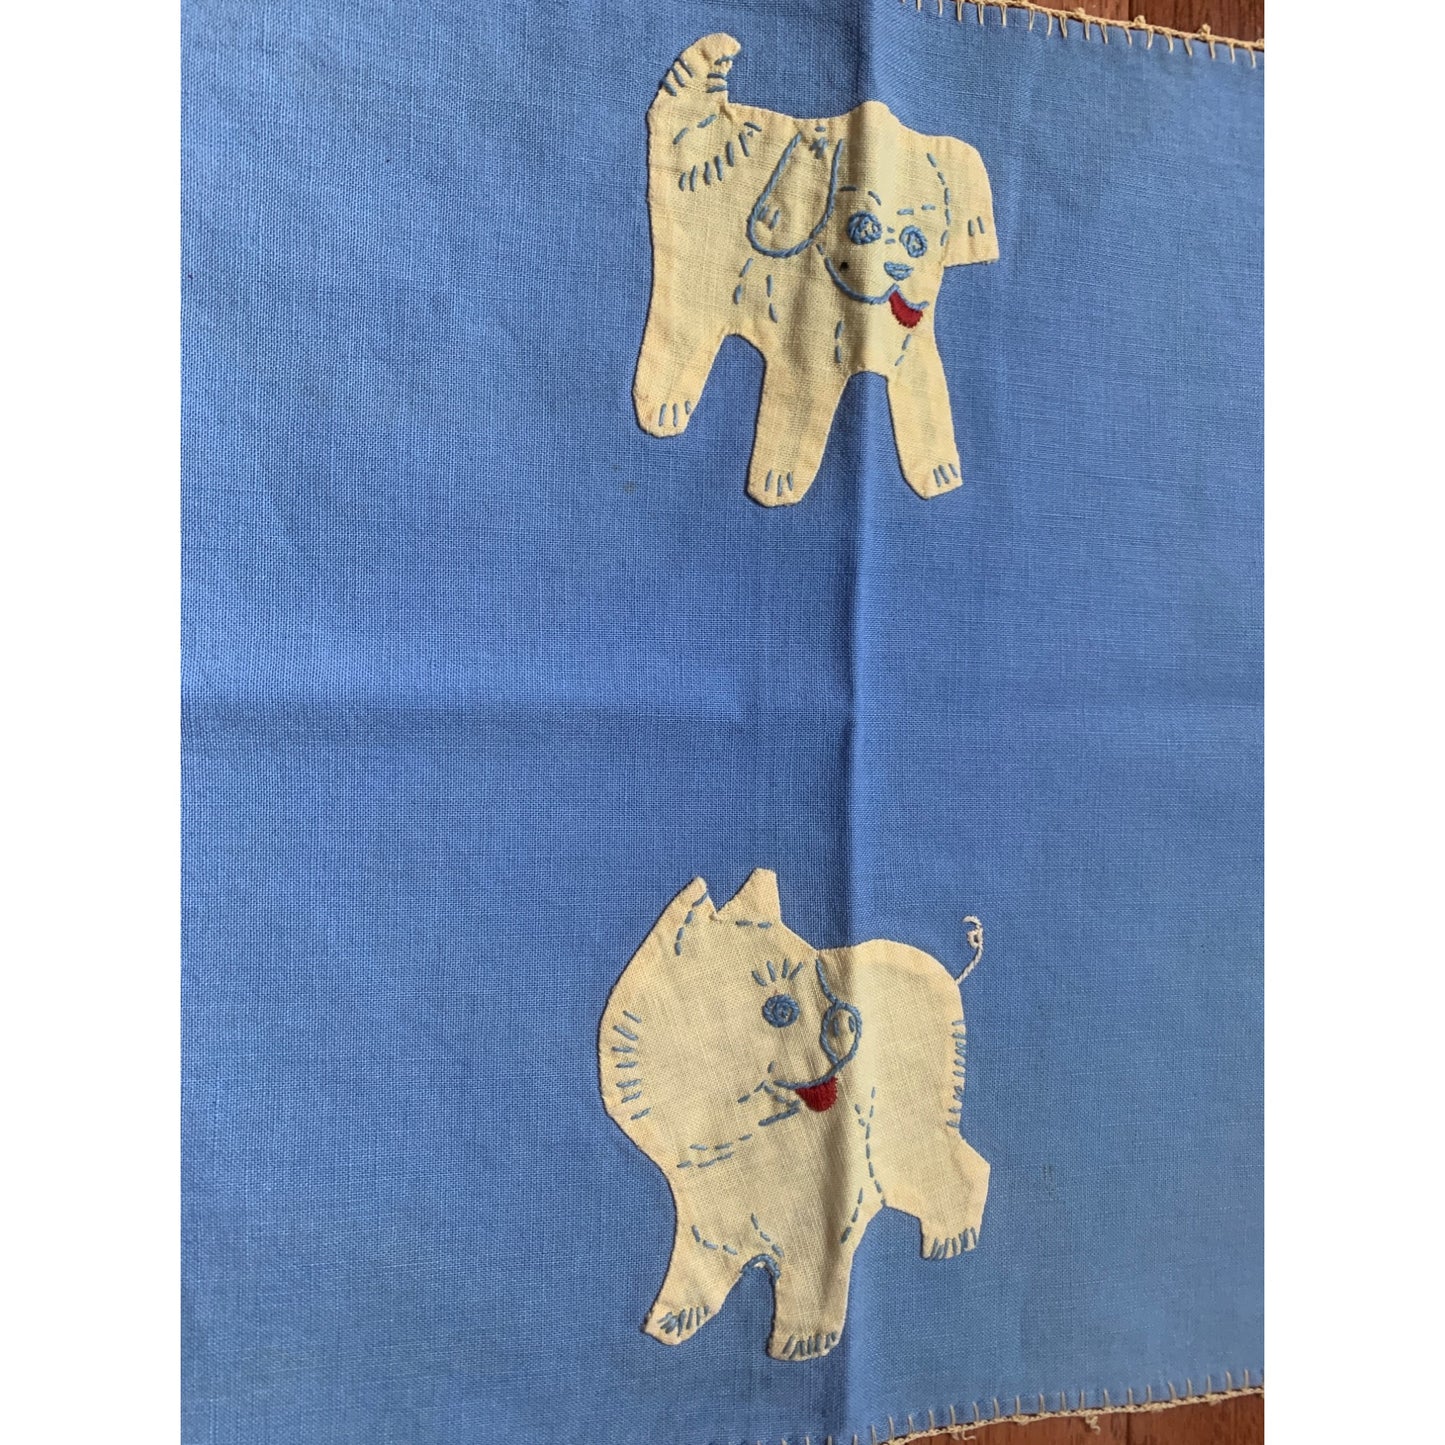 Vintage hand embroidered & appliqué baby animal runner